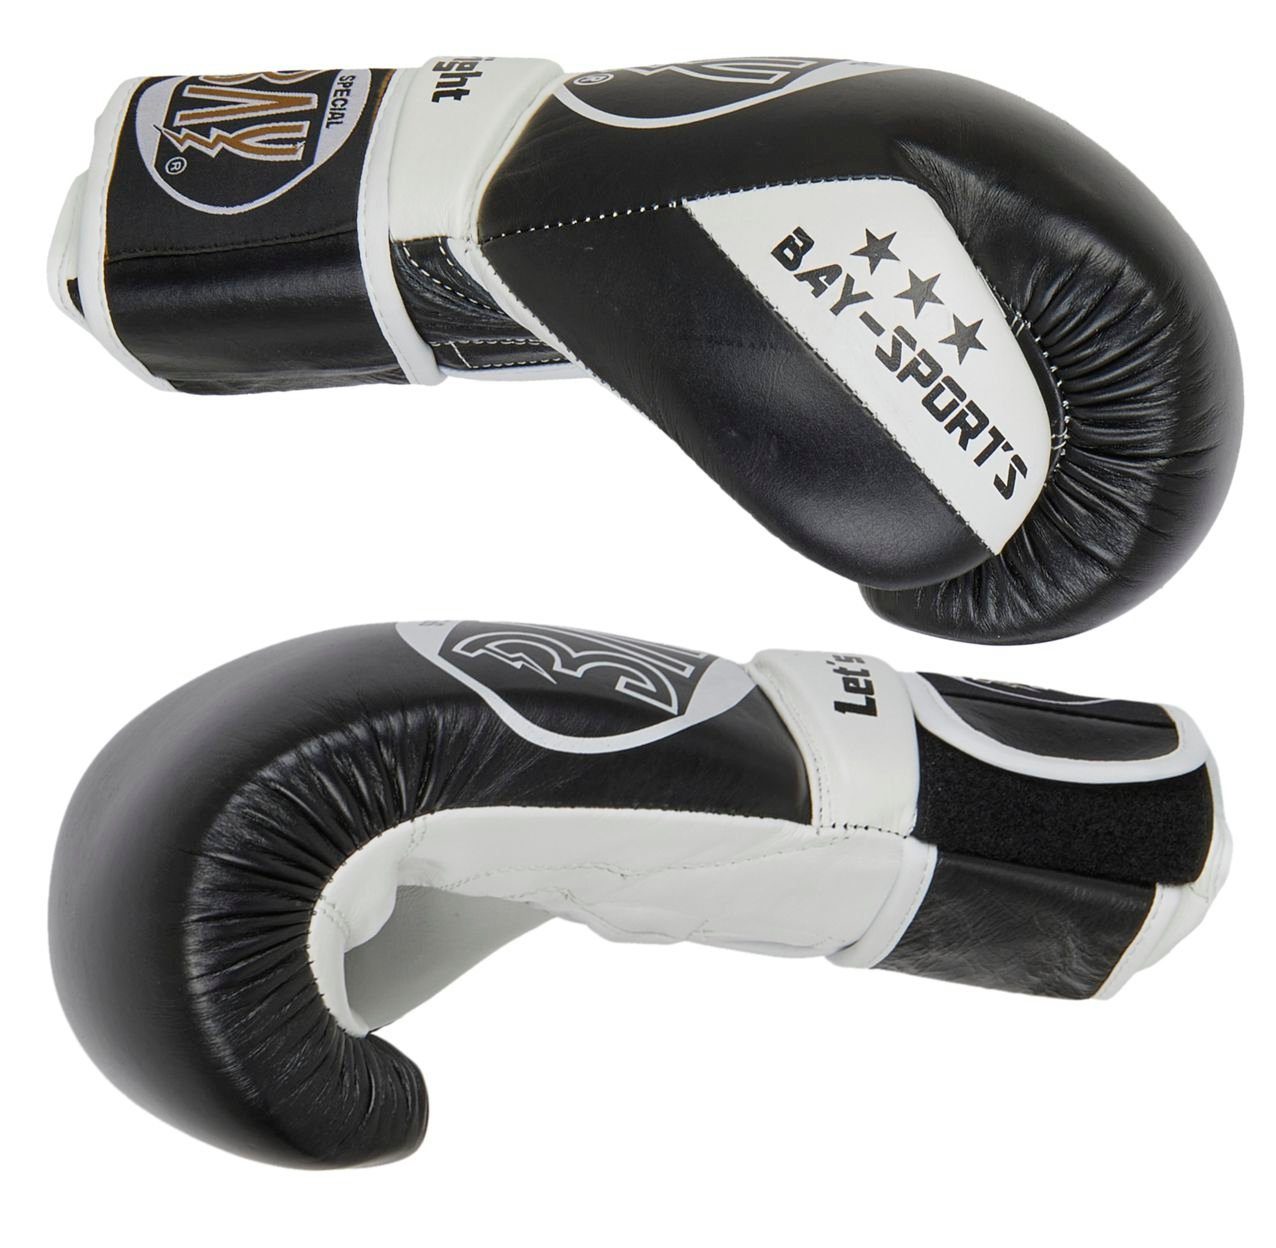 Sport Kampfsportausrüstung BAY-Sports Boxhandschuhe Strike Box-Handschuhe Leder schwarz Boxen Kickboxe